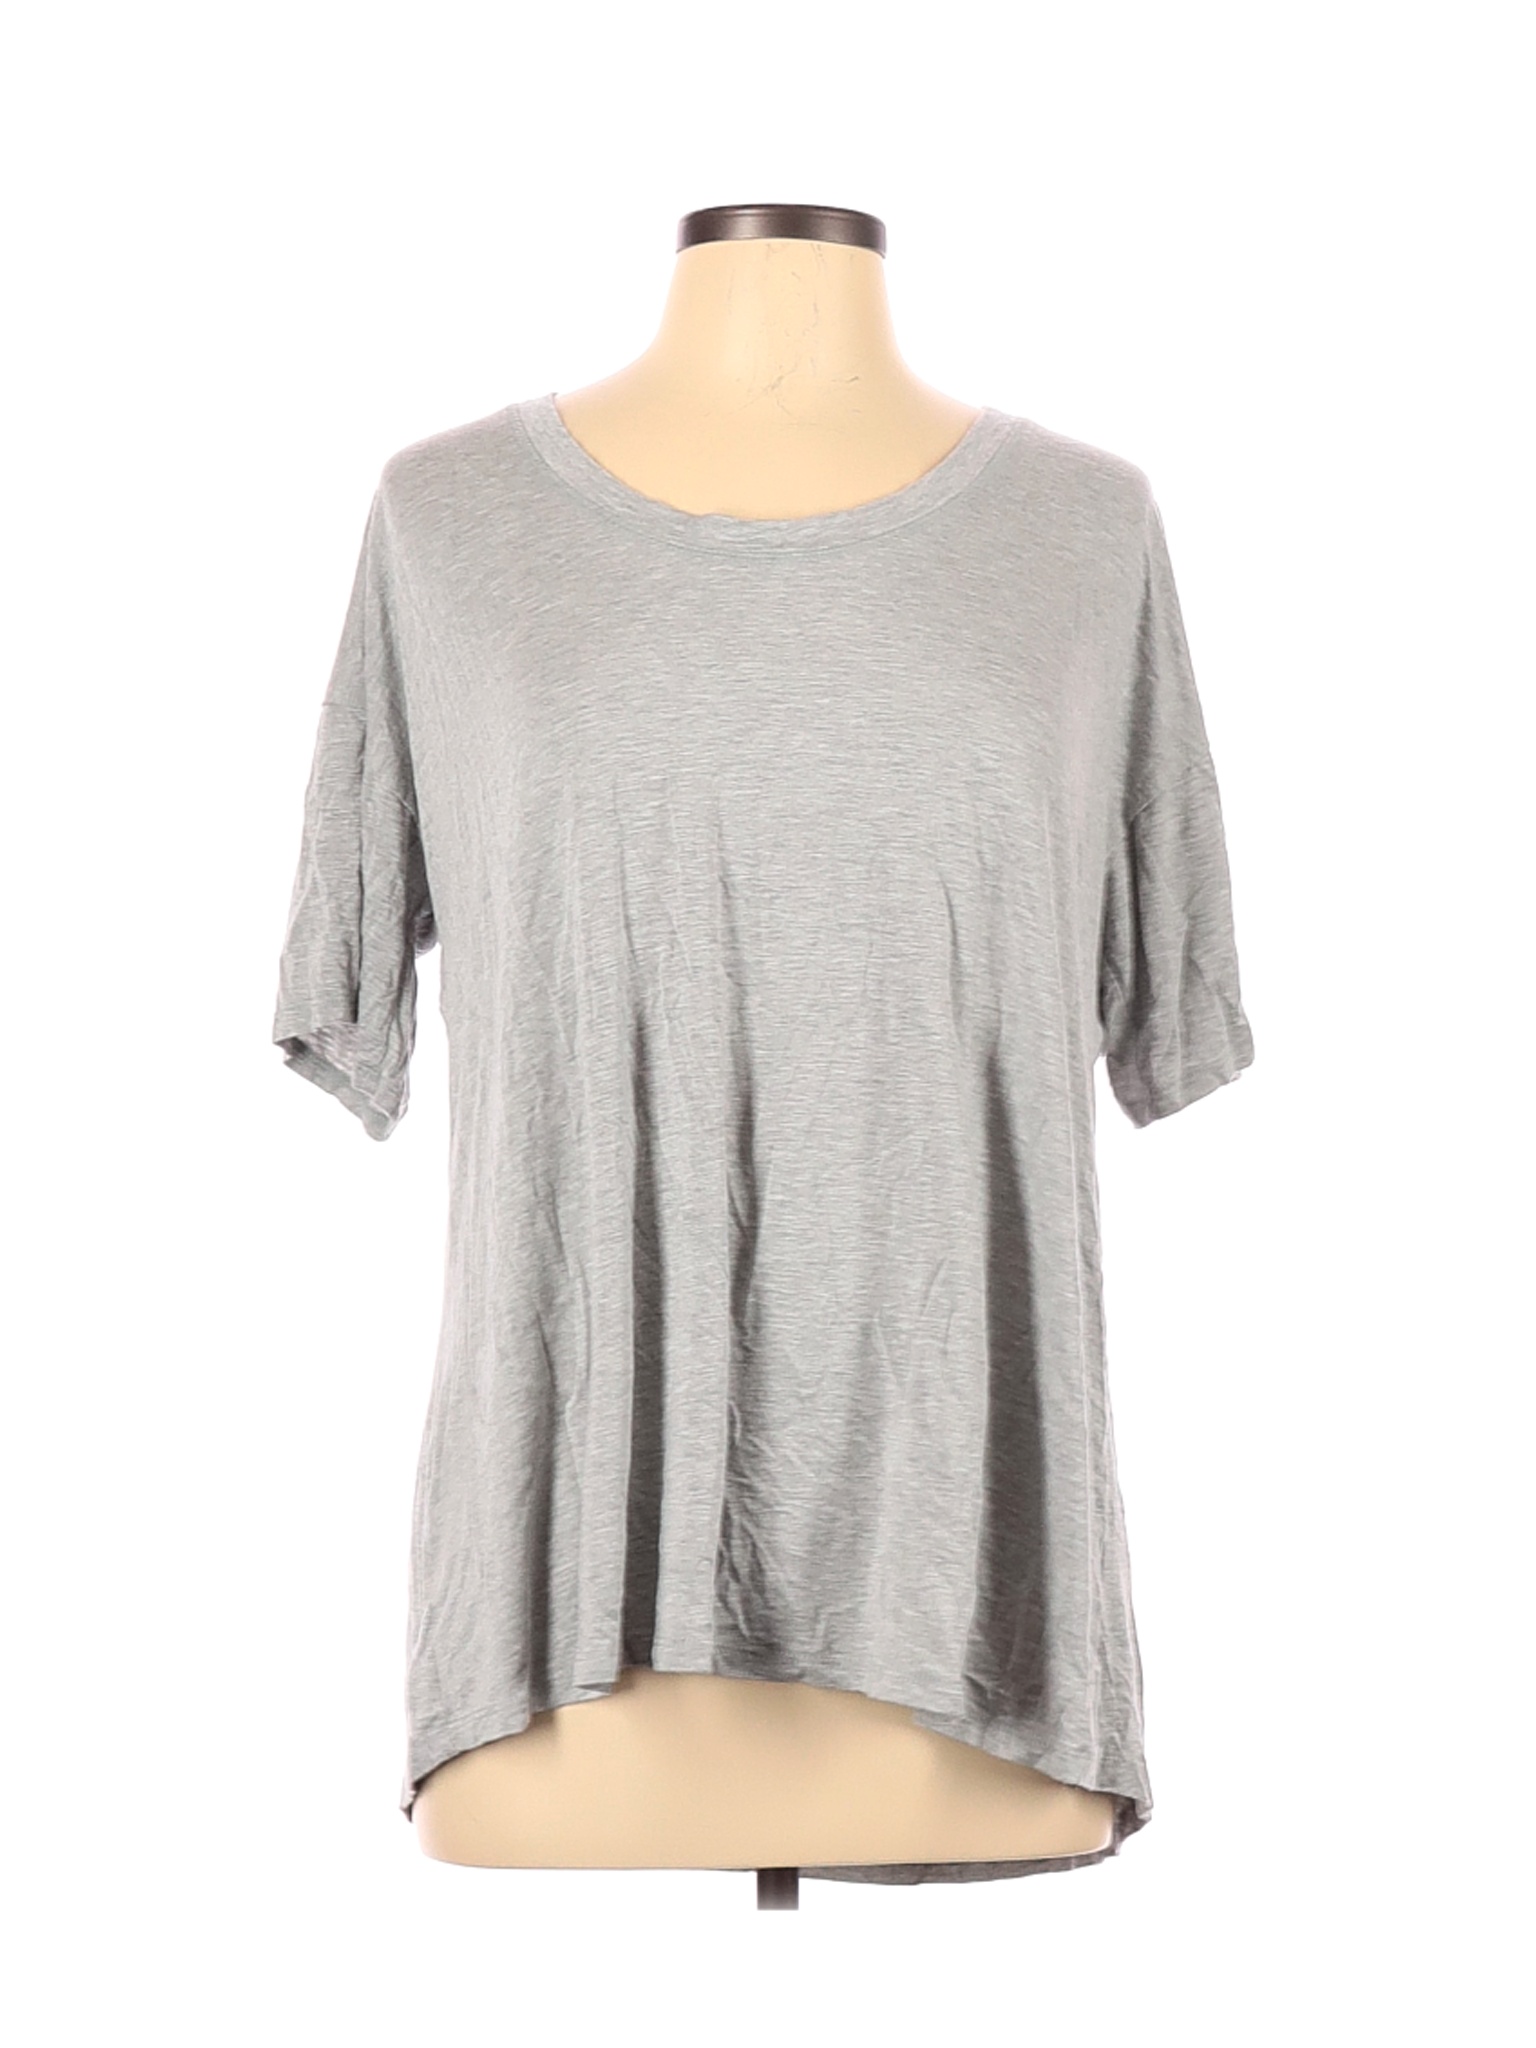 Caslon Women Gray Short Sleeve T-Shirt L | eBay